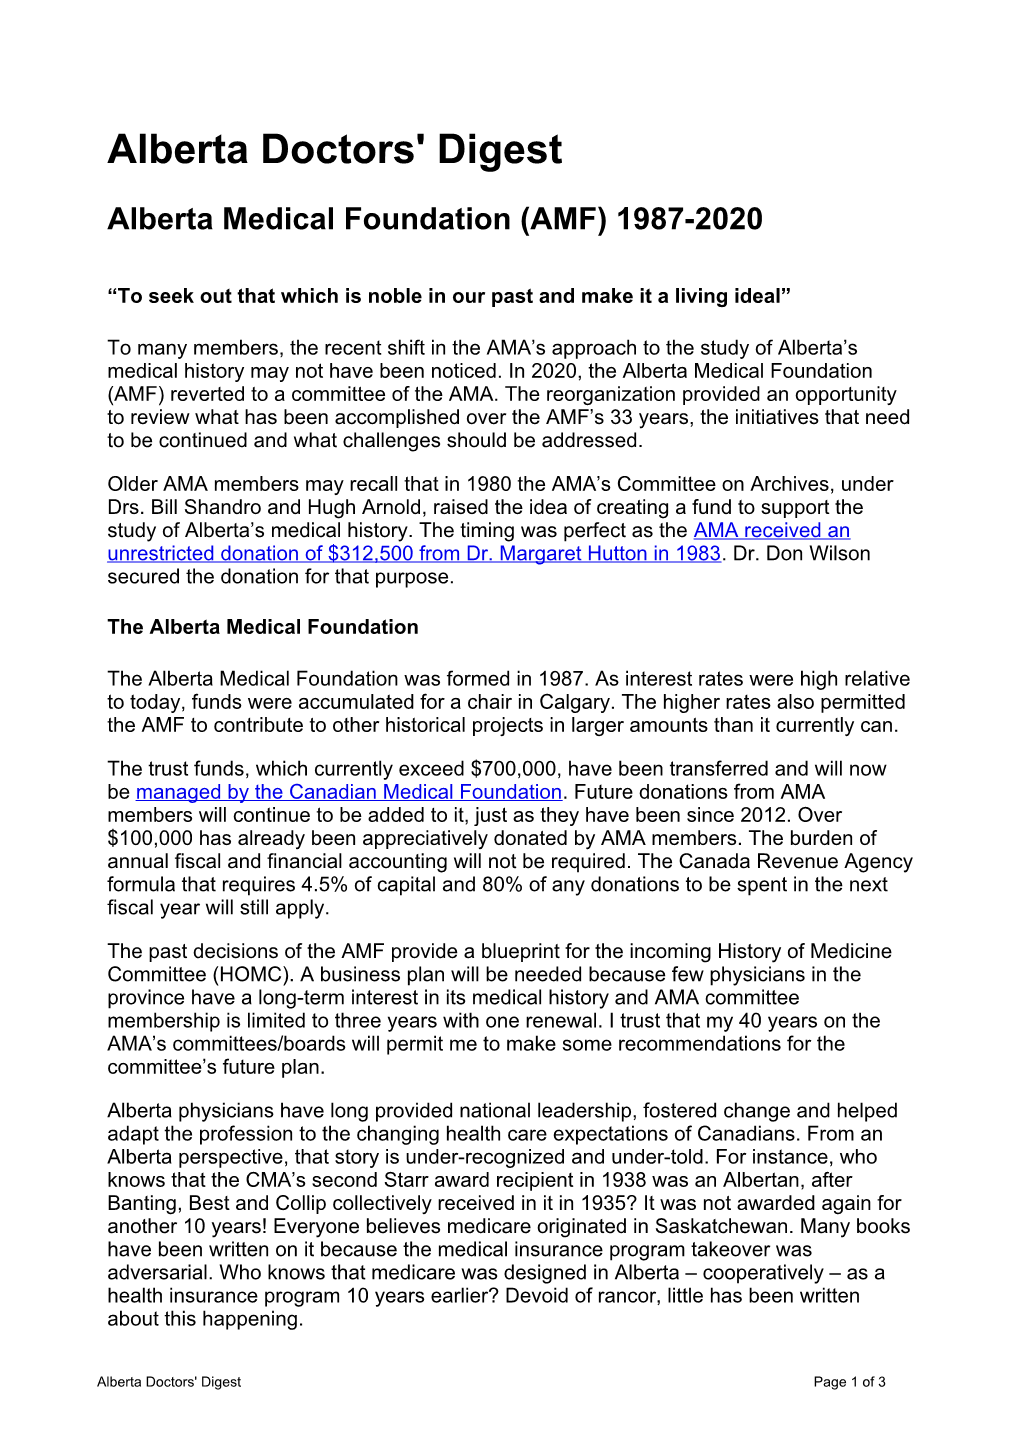 Alberta Medical Foundation (AMF) 1987-2020 | Alberta Doctors' Digest